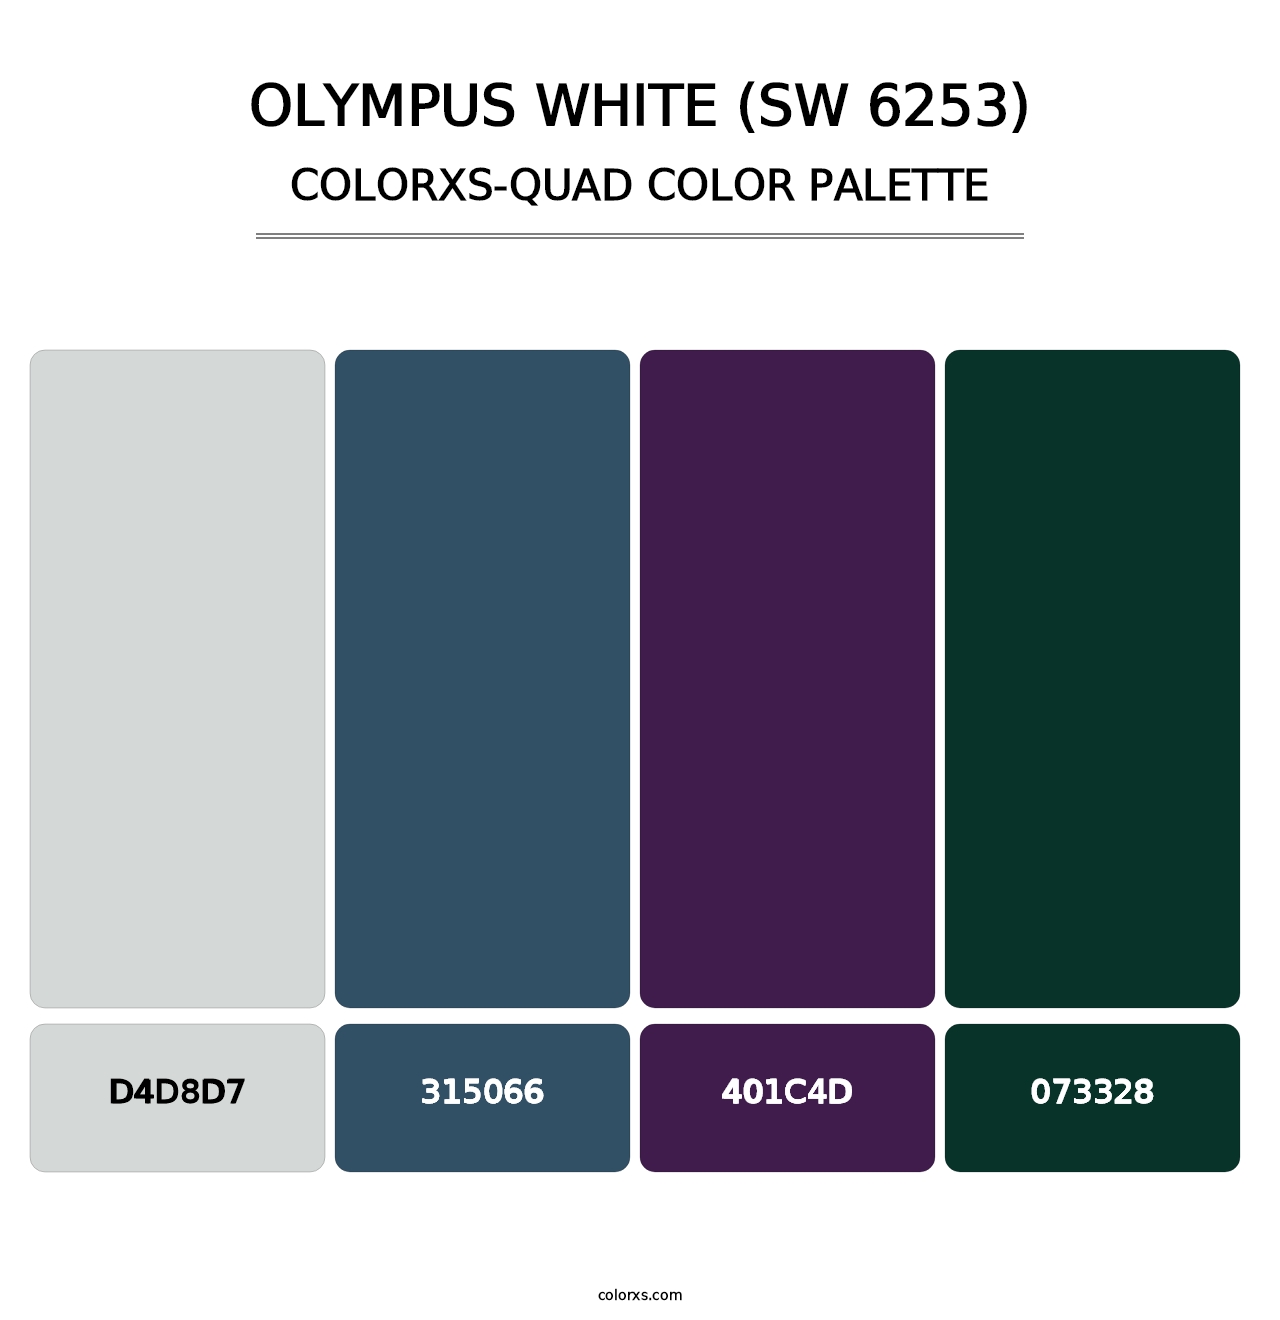 Olympus White (SW 6253) - Colorxs Quad Palette